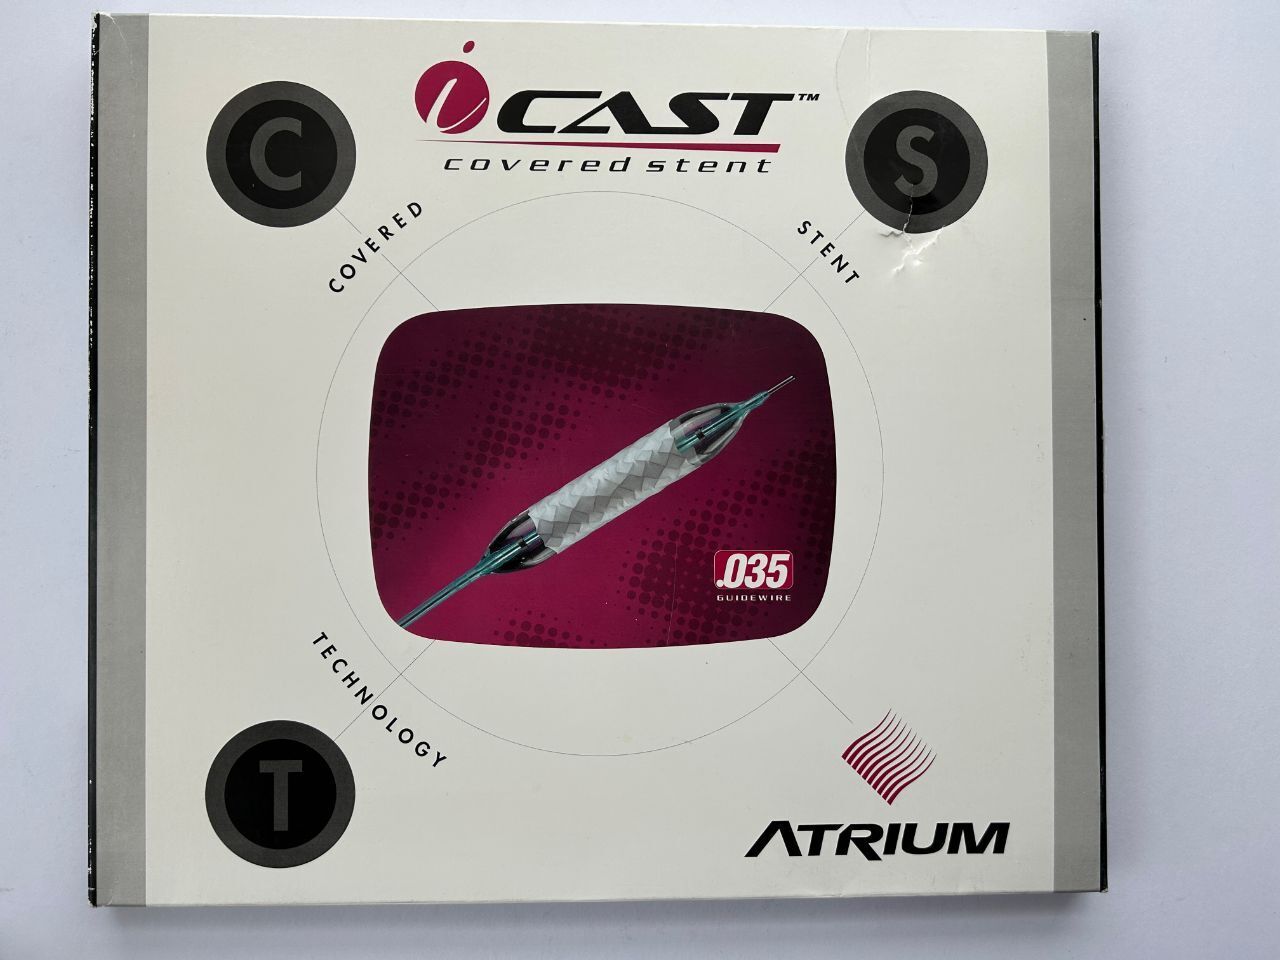 ATRIUM CAST covered stent 7mm x 22mm x 120cm REF: 85455 DATE: 2008/08